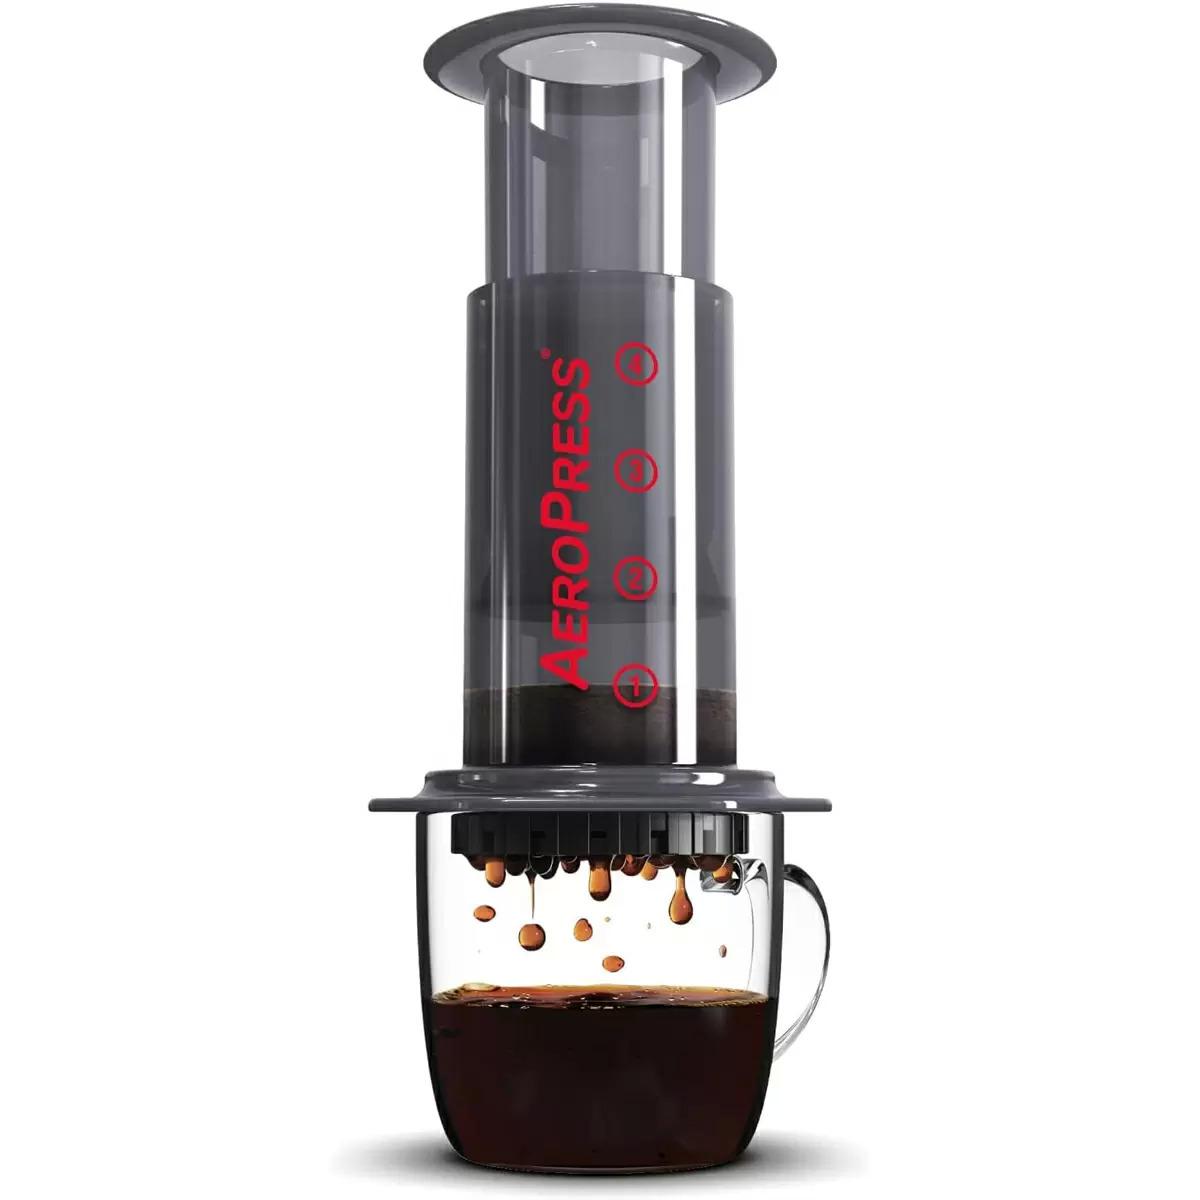 Aeropress Original Coffee Press for $31.95 Shipped